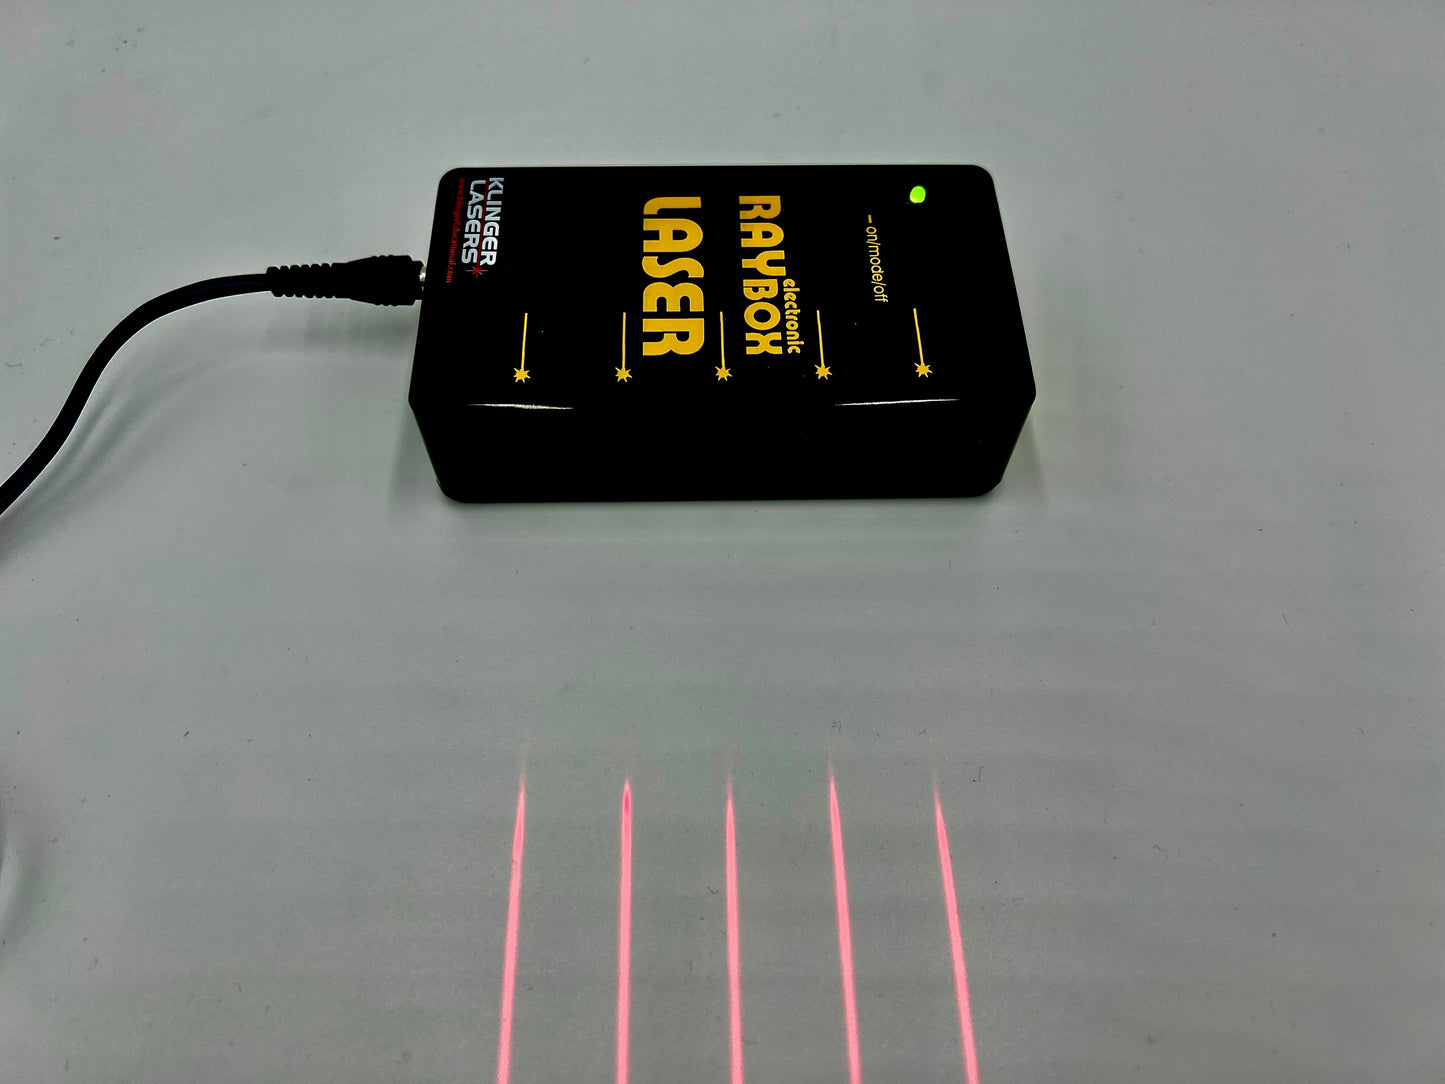 LRB-ELEC-KL Laser Ray Box